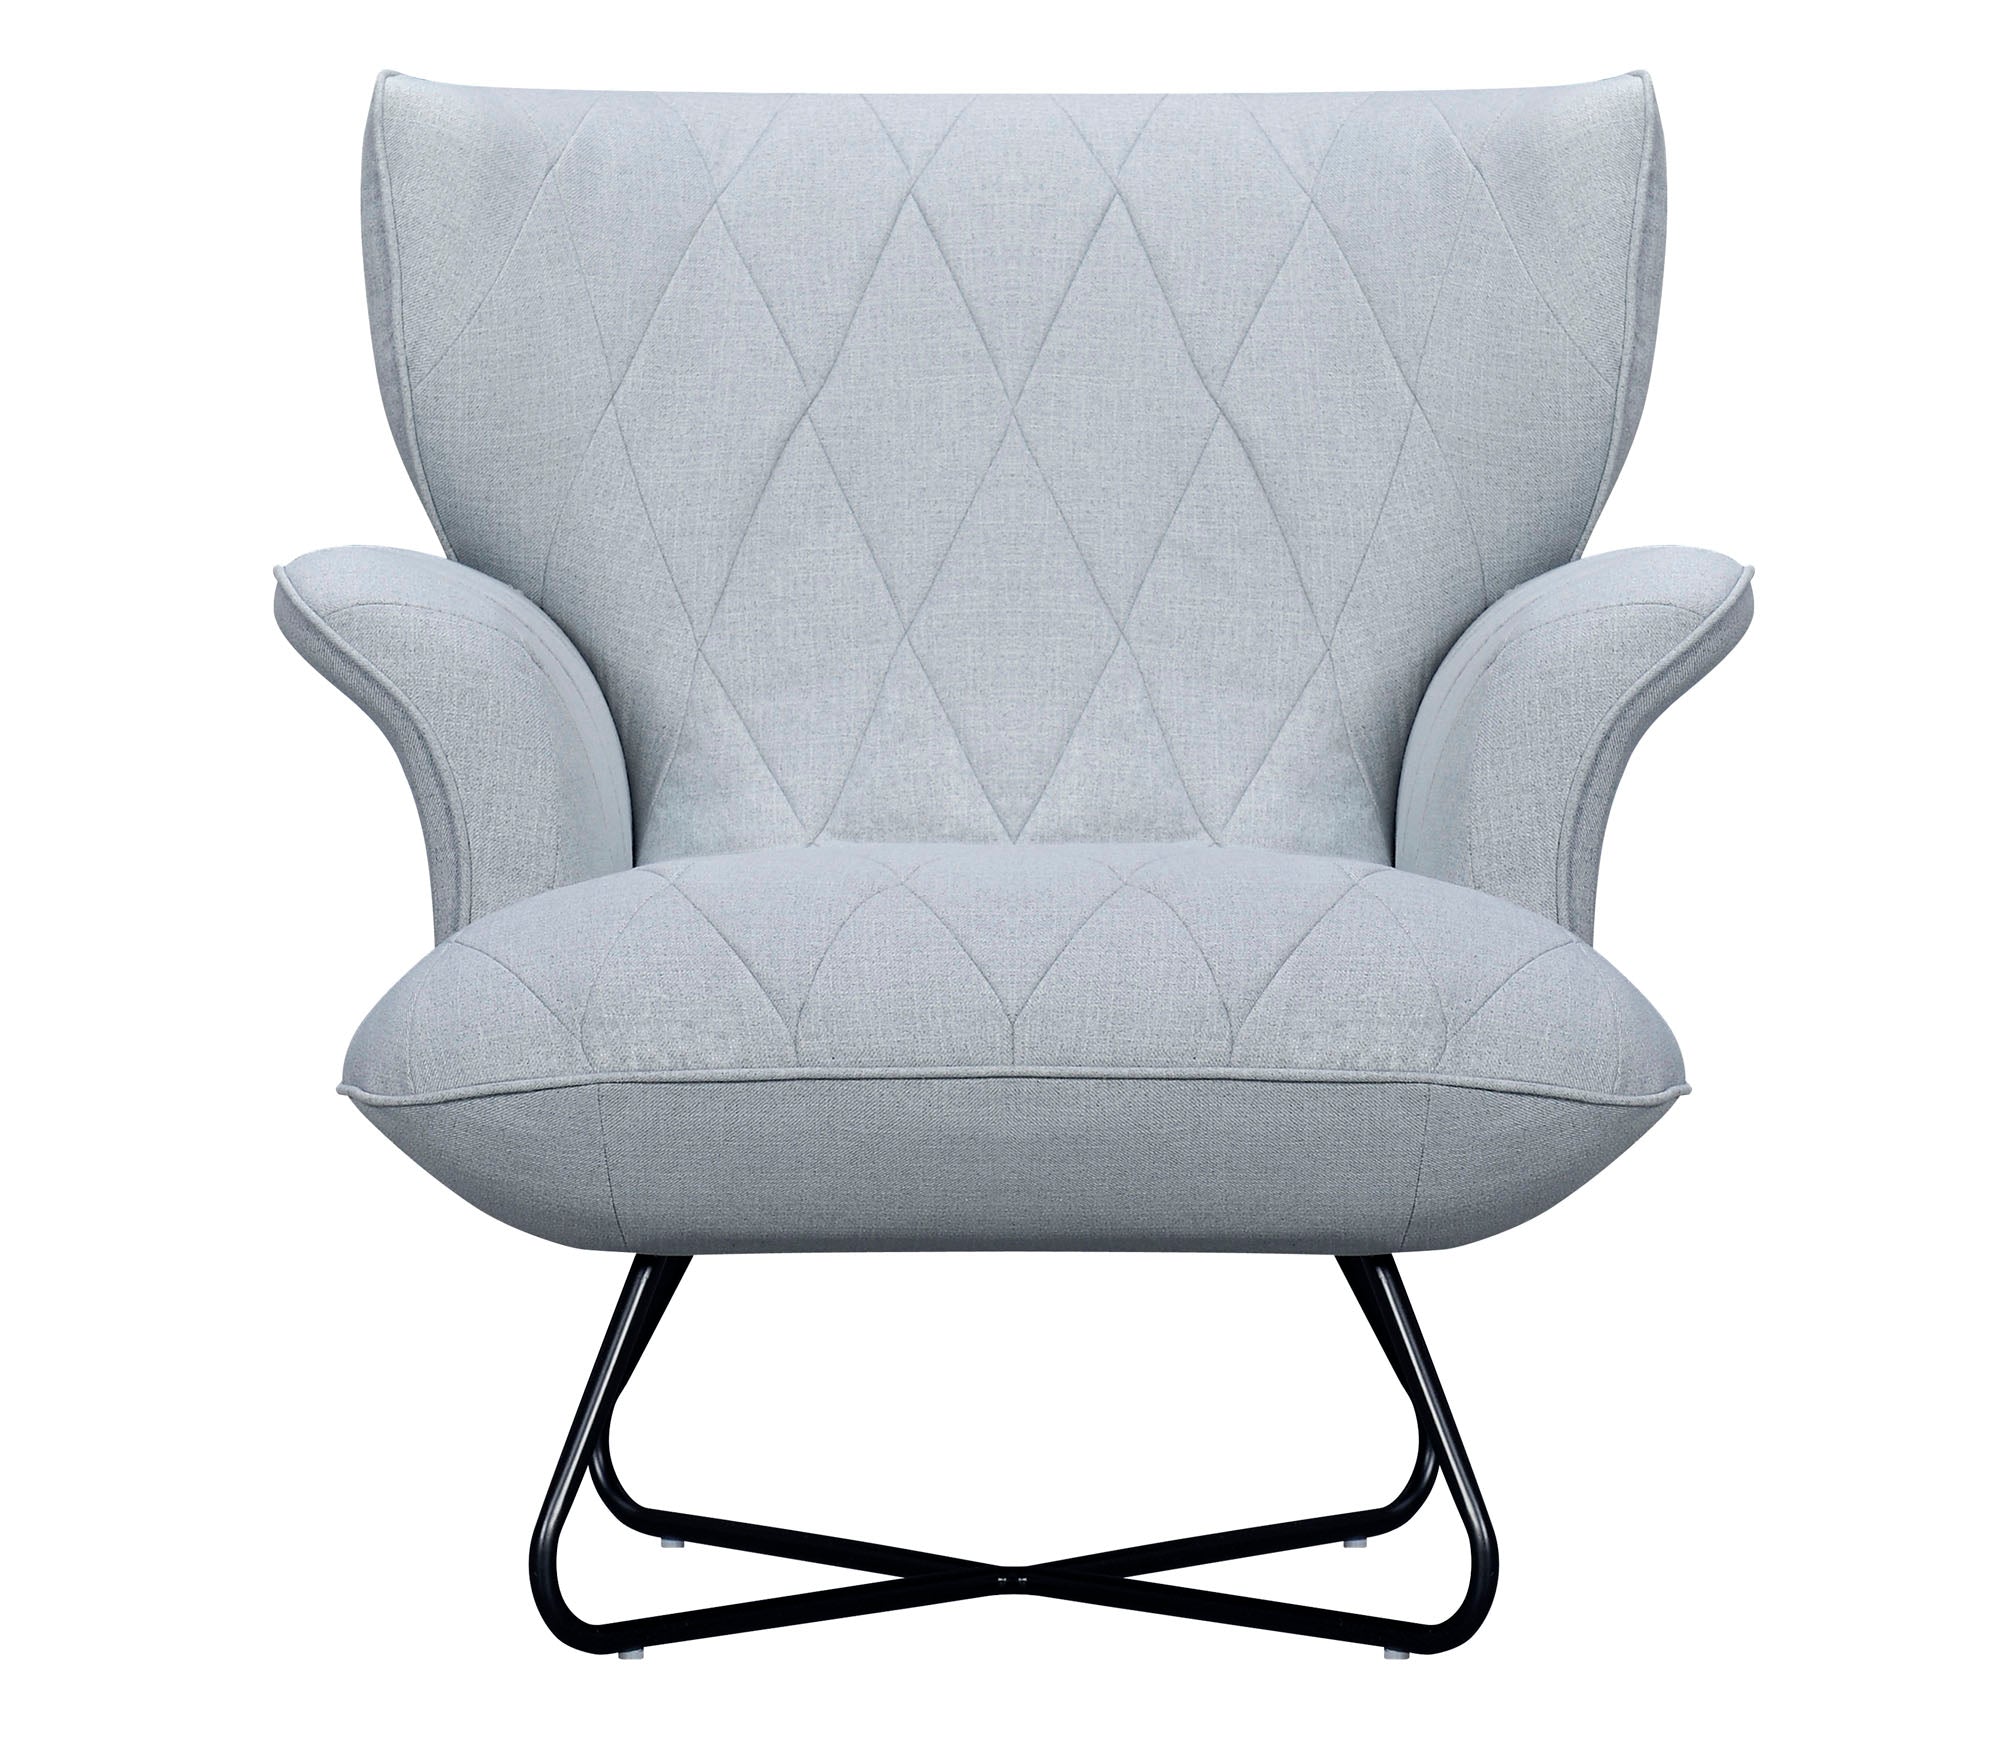 Diamond Seaglass Accent Chair - MJM Furniture